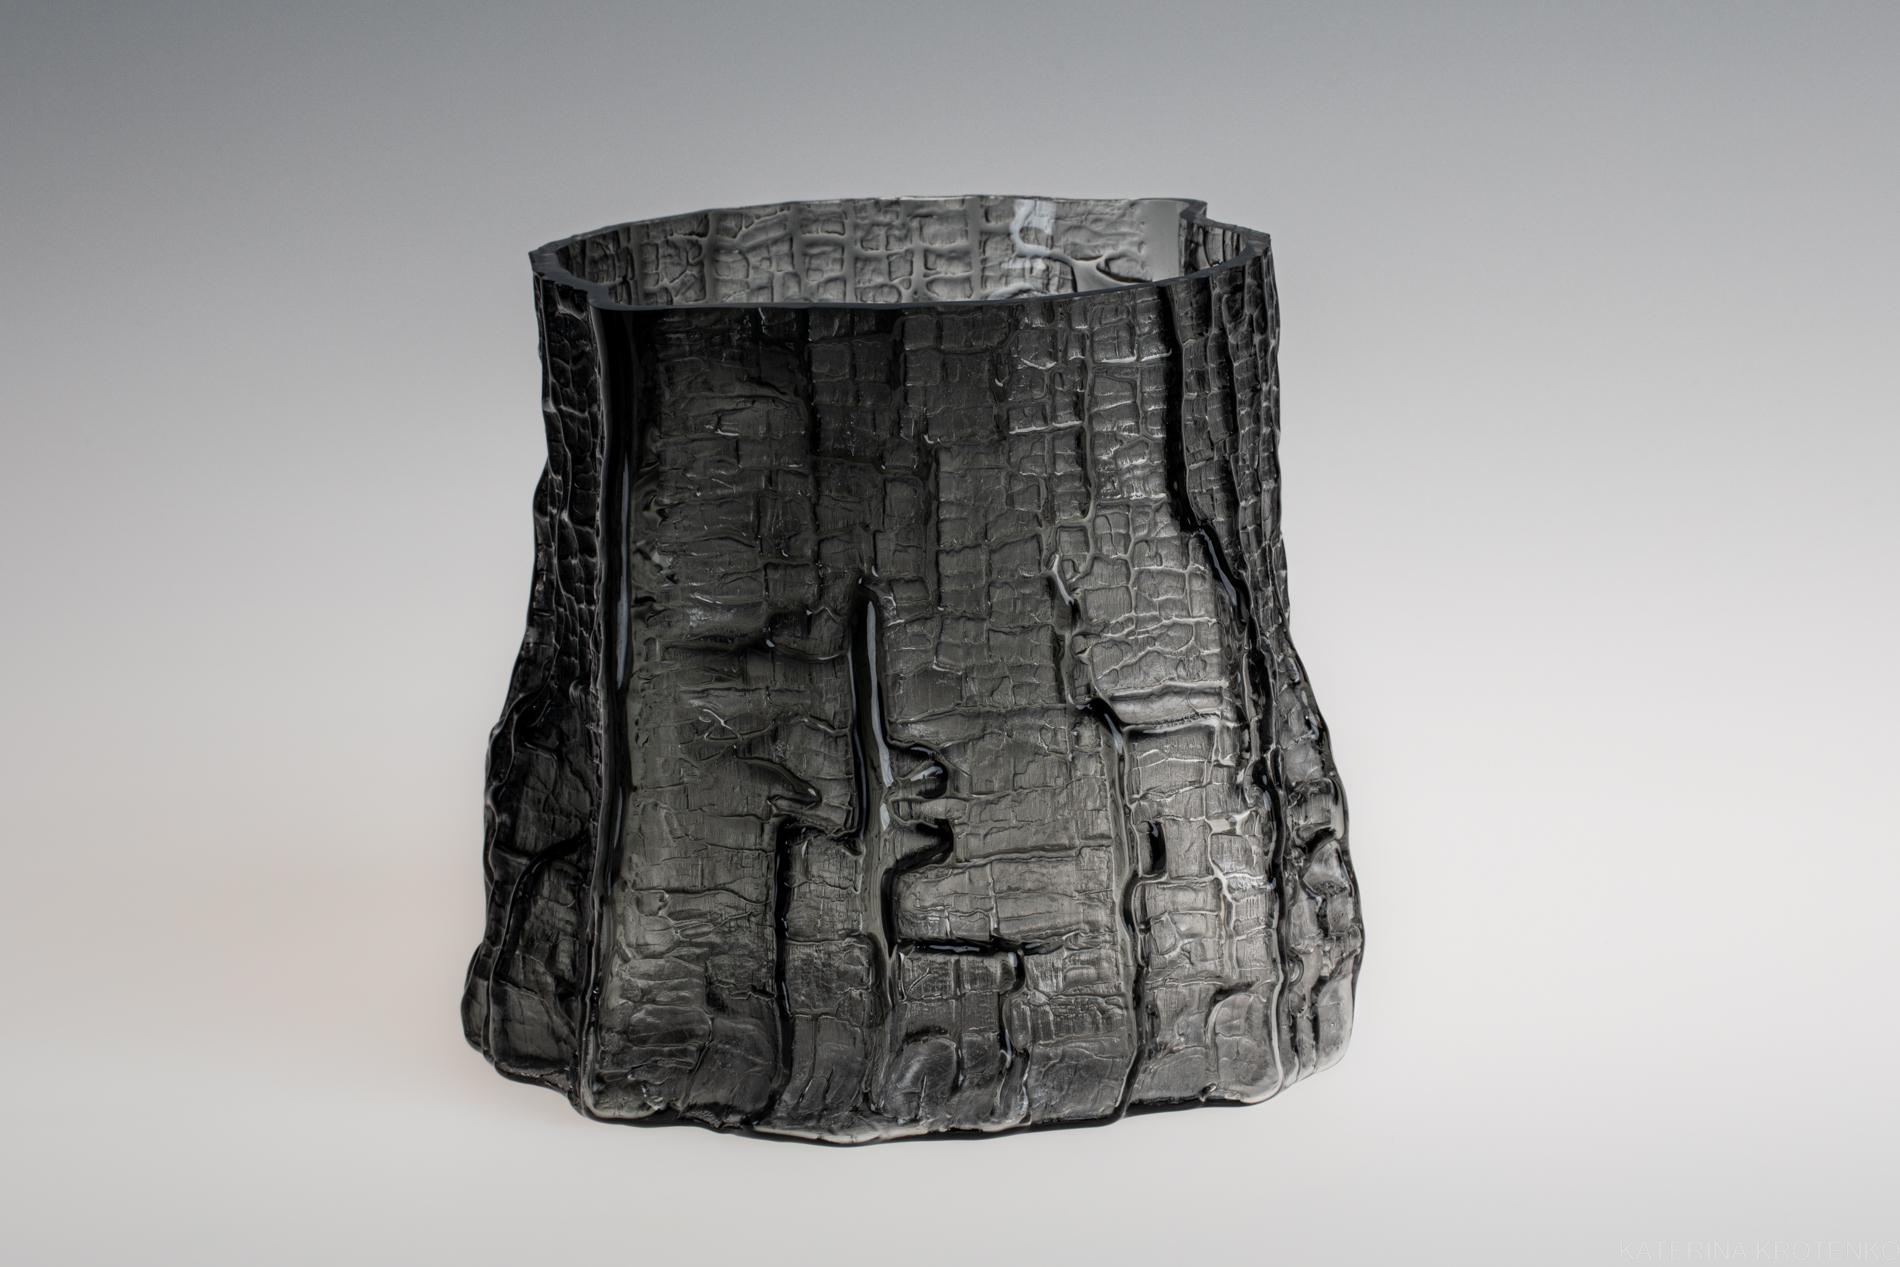 Shaped by fire — sculptural glass vase, volume IV, smoky dark grey - Gray Still-Life Sculpture by Katerina Krotenko